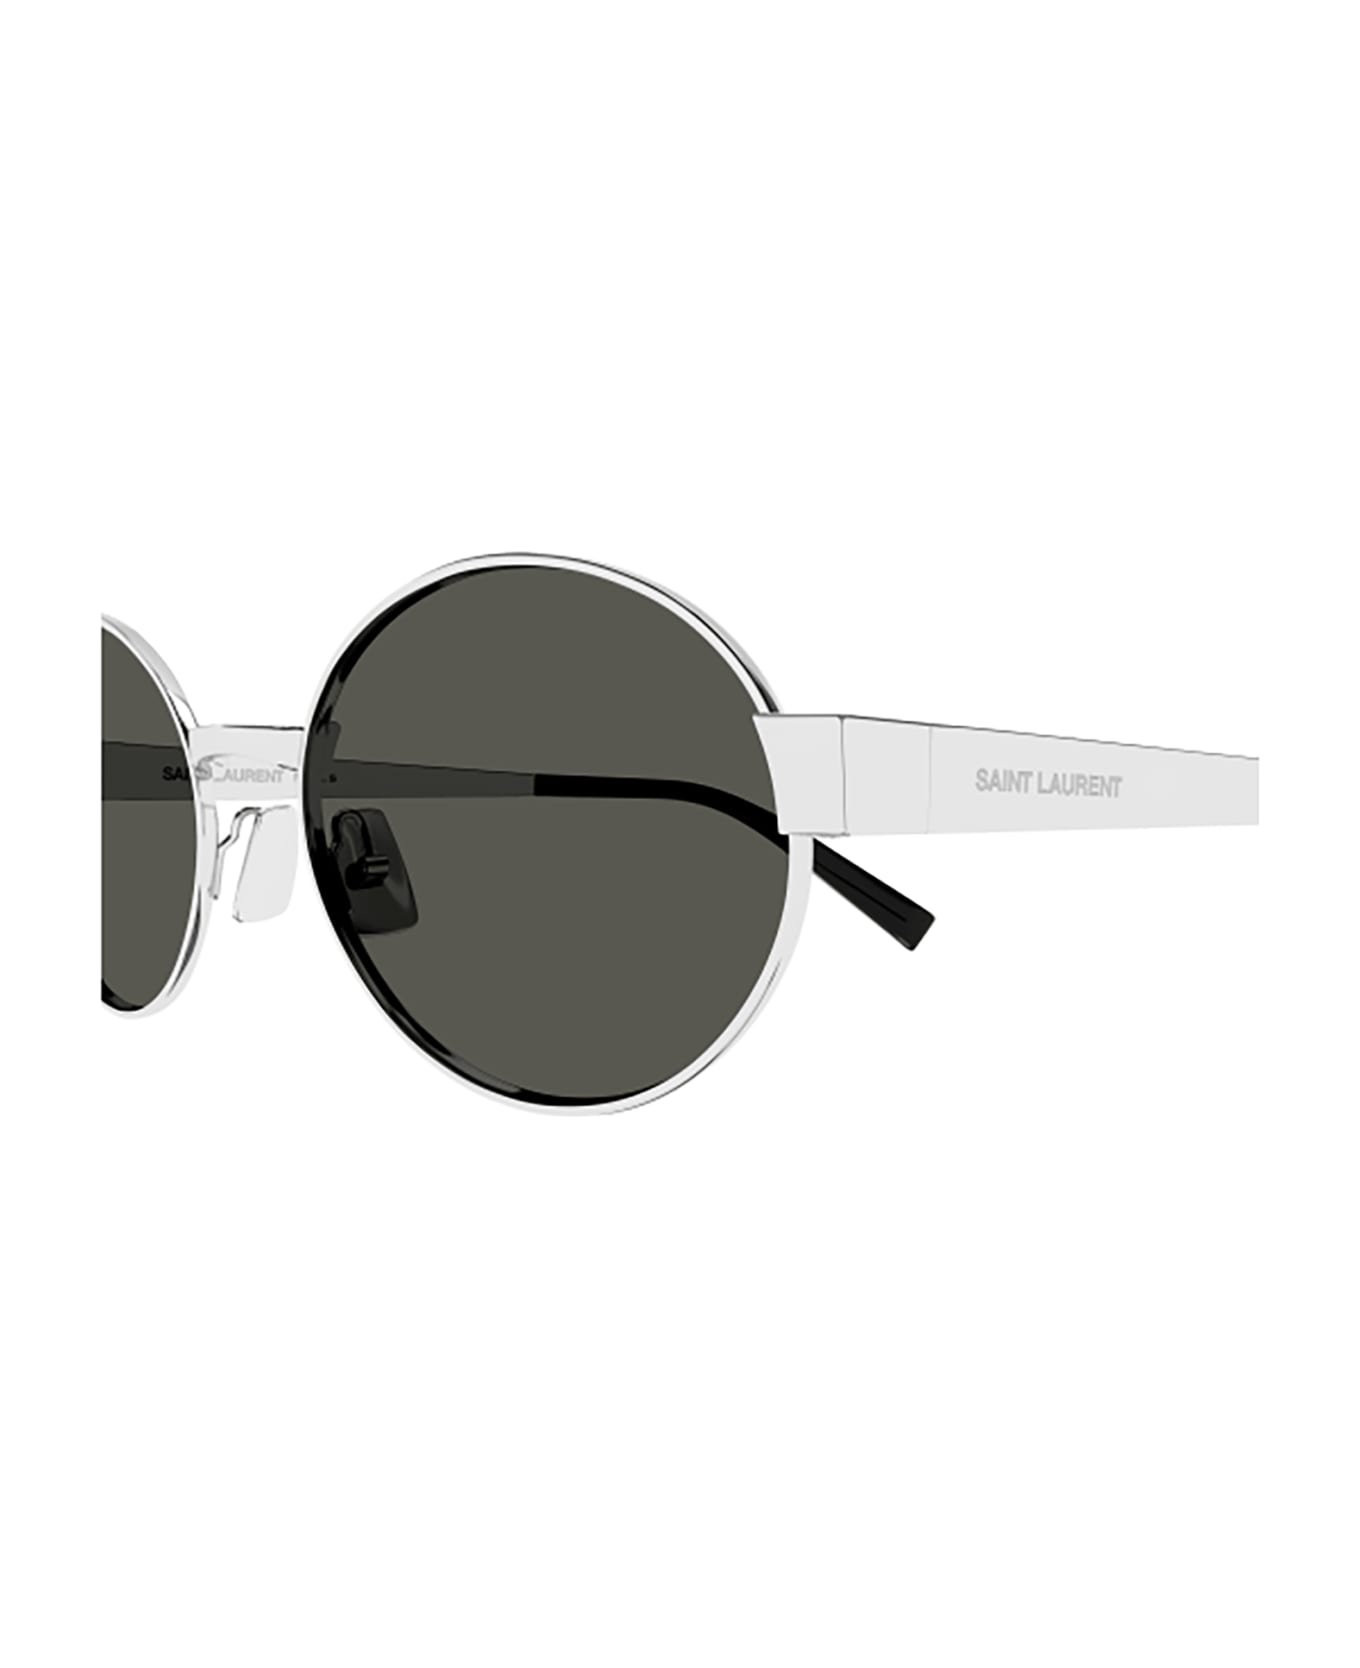 Saint Laurent Eyewear Sl 692 Sunglasses - 002 silver silver grey